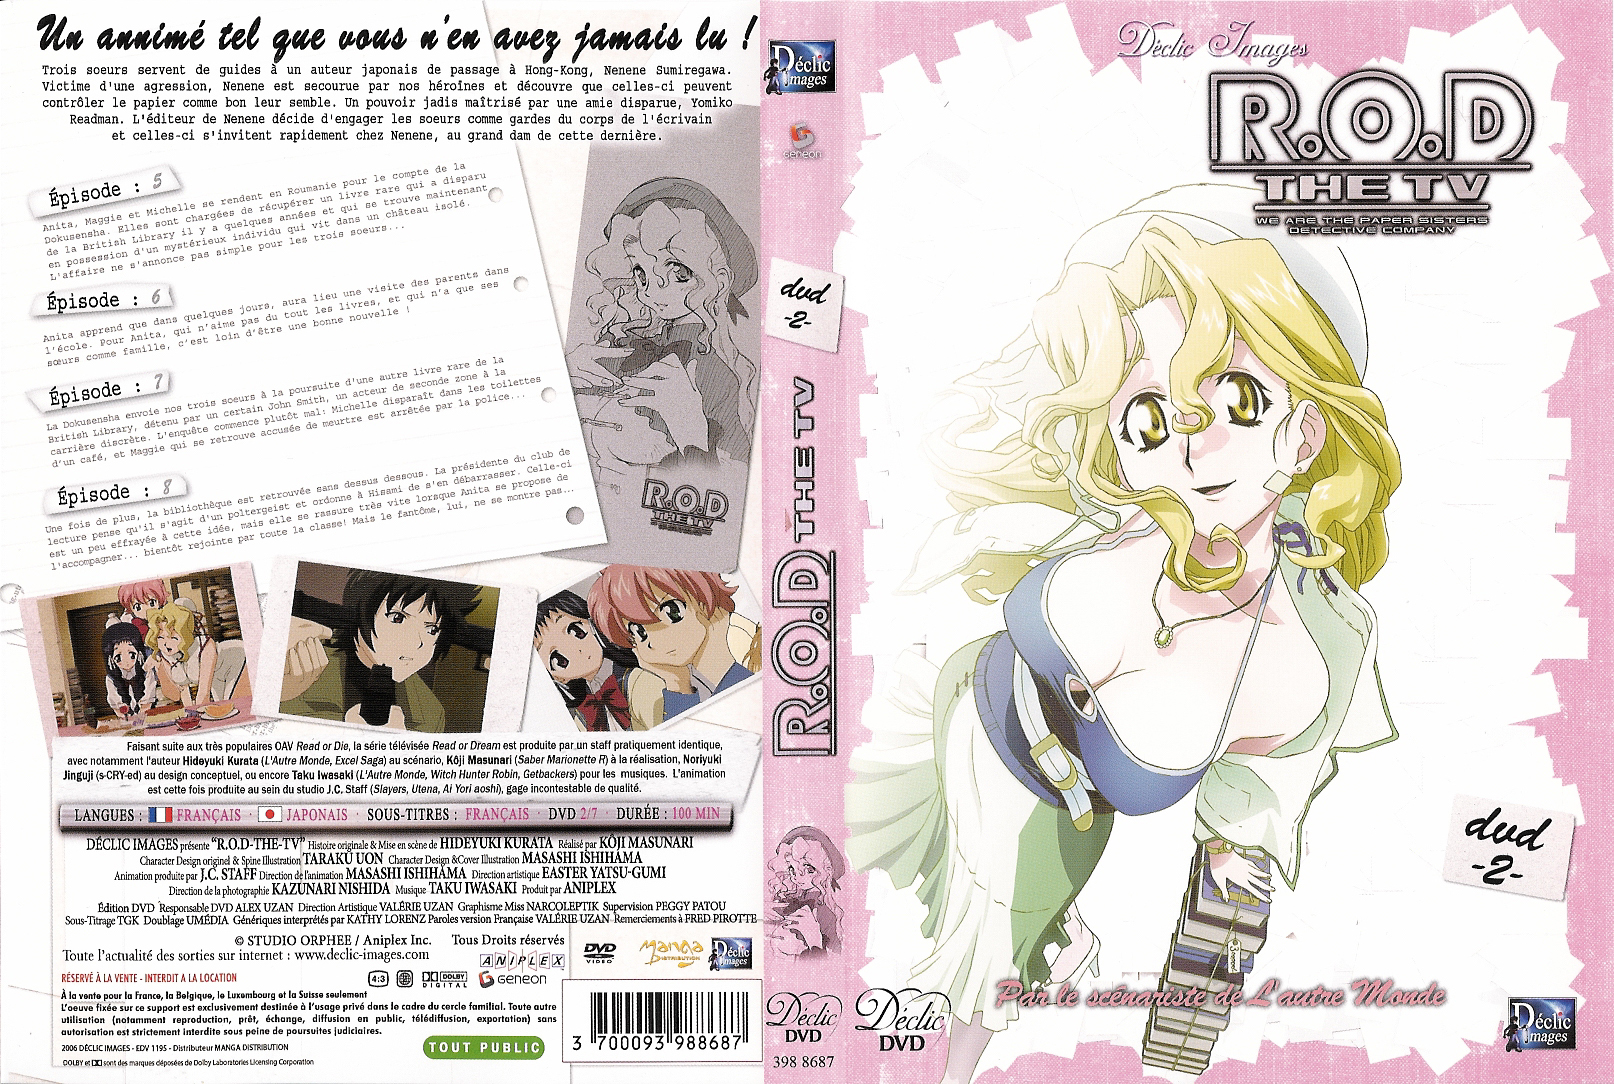 Jaquette DVD ROD vol 2